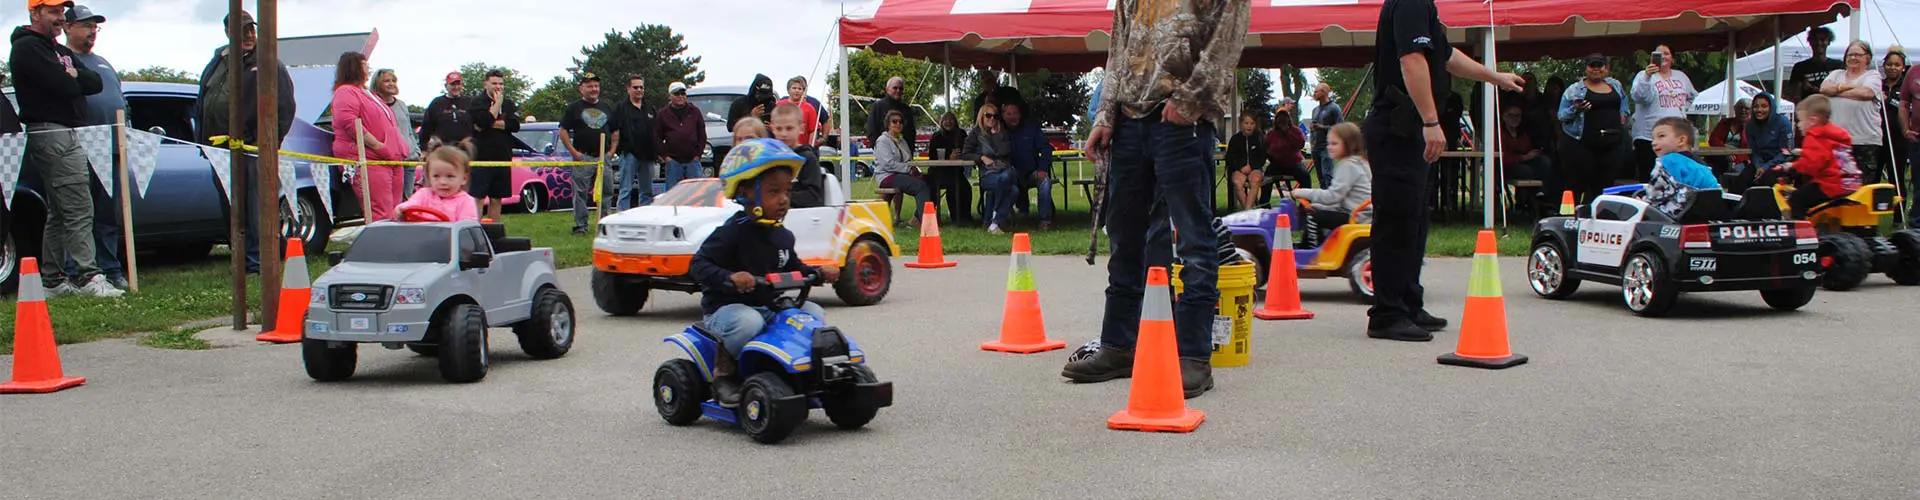 kids-riding-around-on-power-wheels